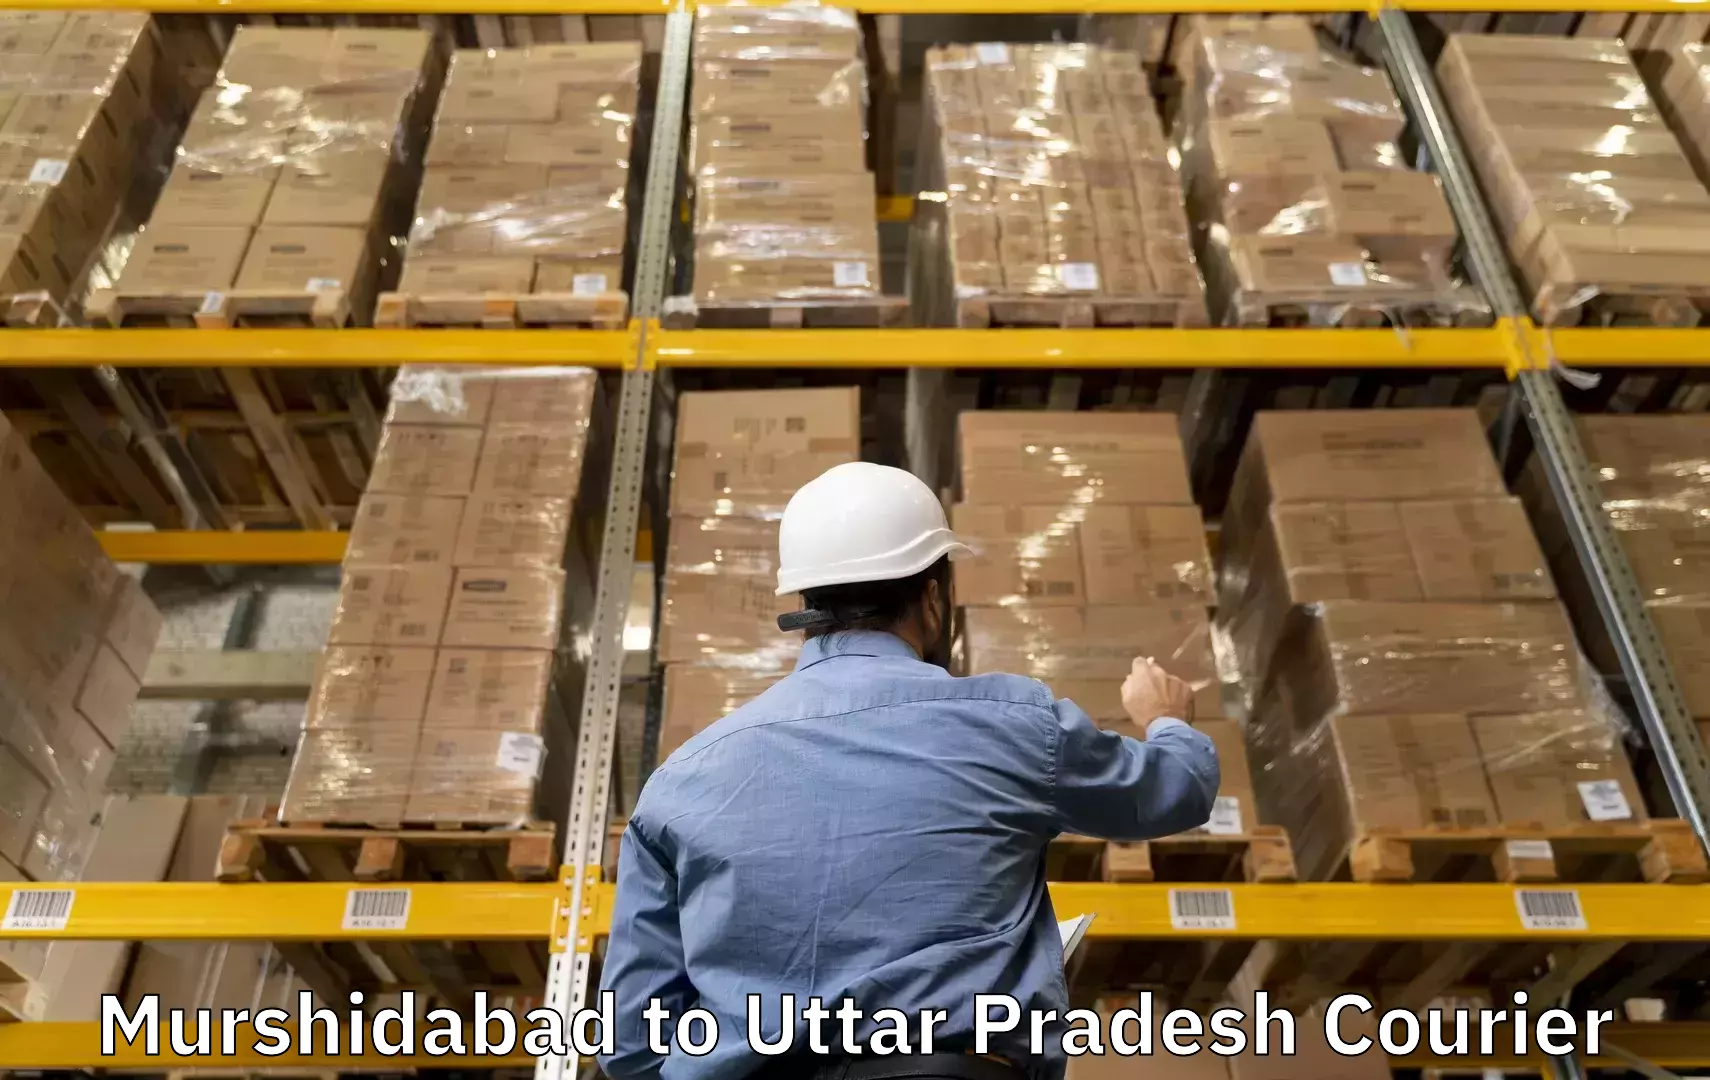 Baggage transport network Murshidabad to Uttar Pradesh